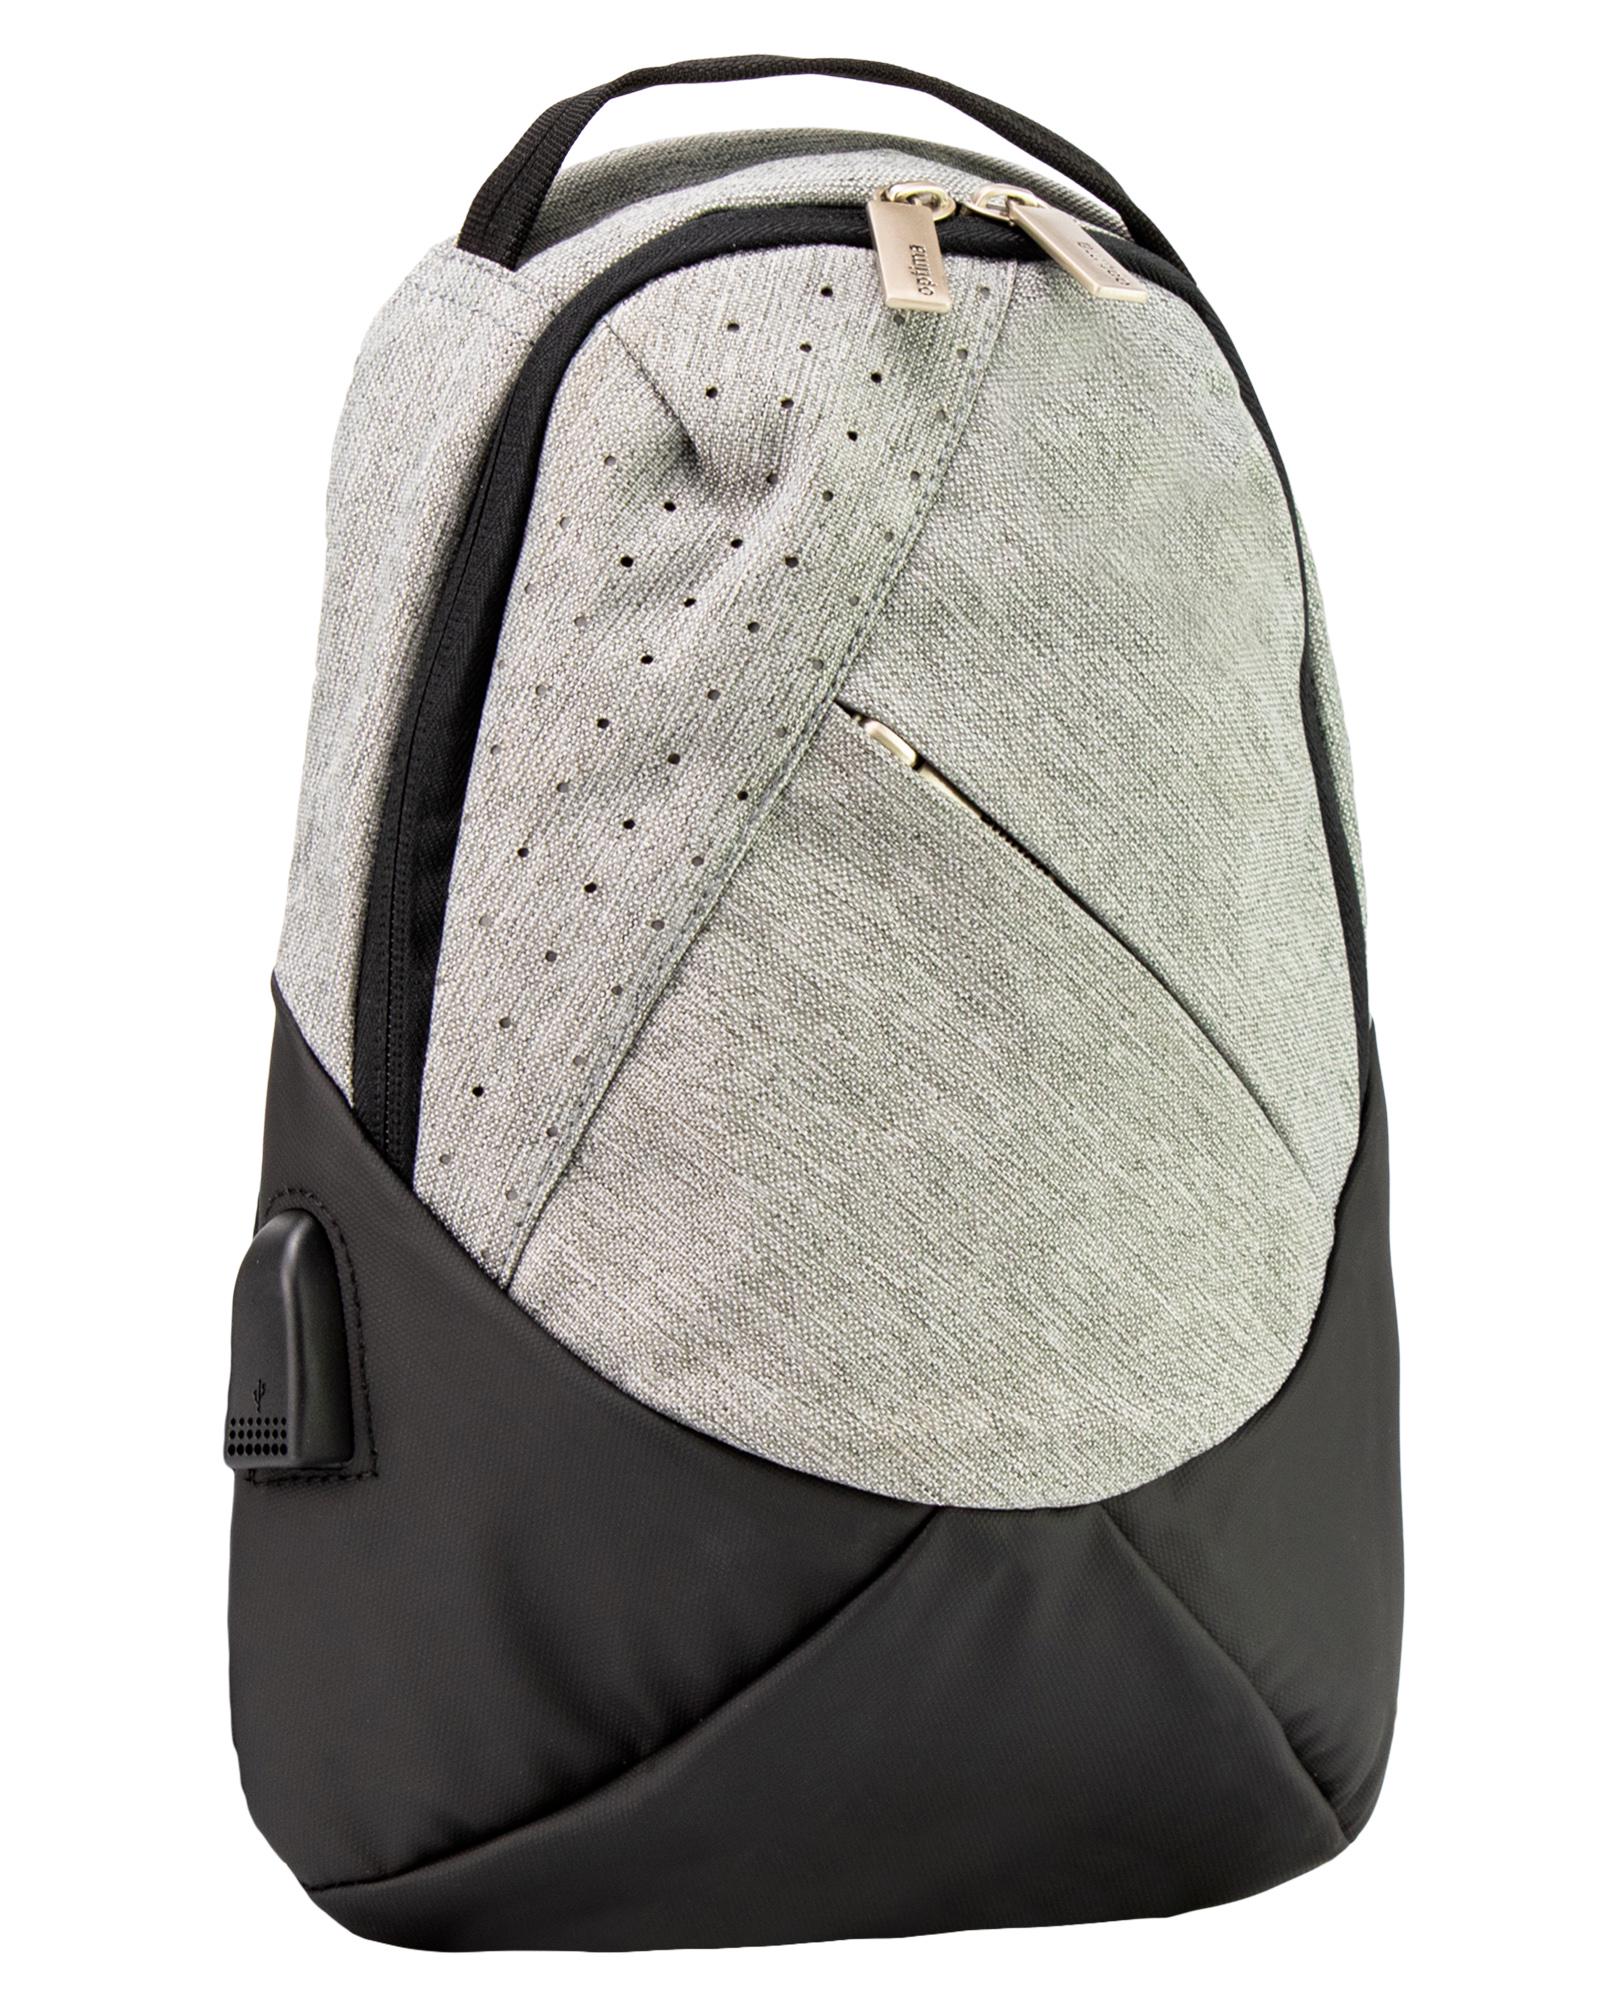 Рюкзак на плечо Optima 6-15 л Черно-серый (O96912-02)